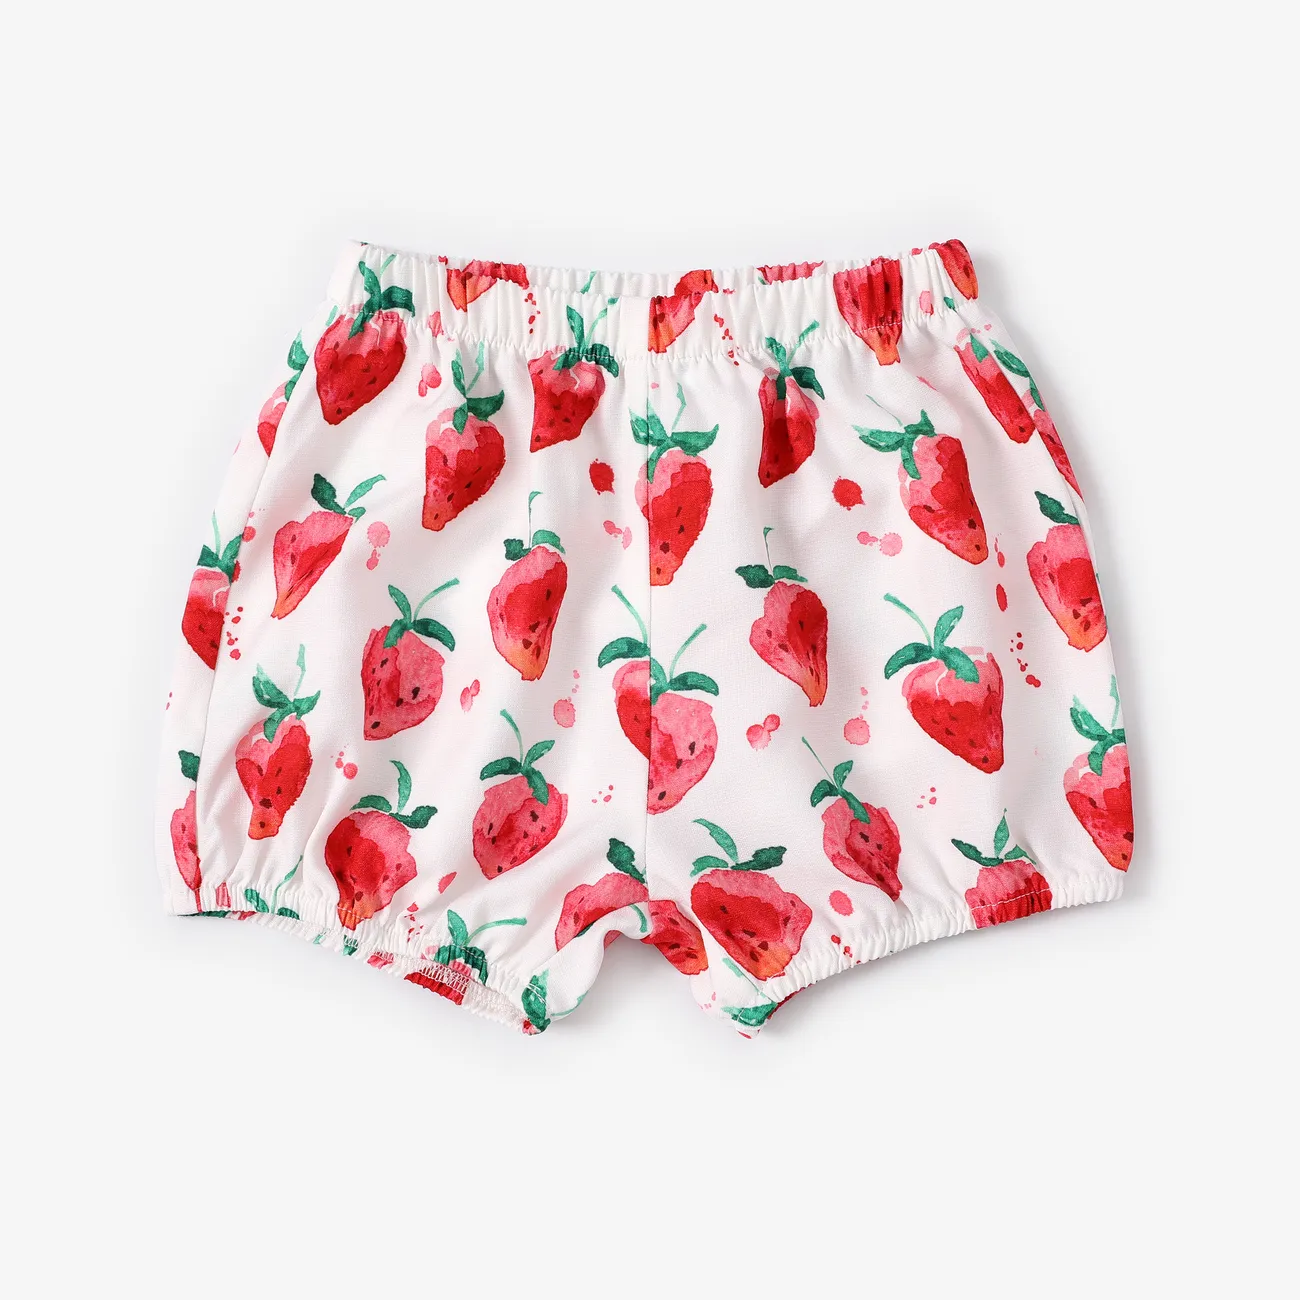 Baby Girl 2pcs Cooling Denim Camisole and Floral Print Shorts Set REDWHITE big image 1